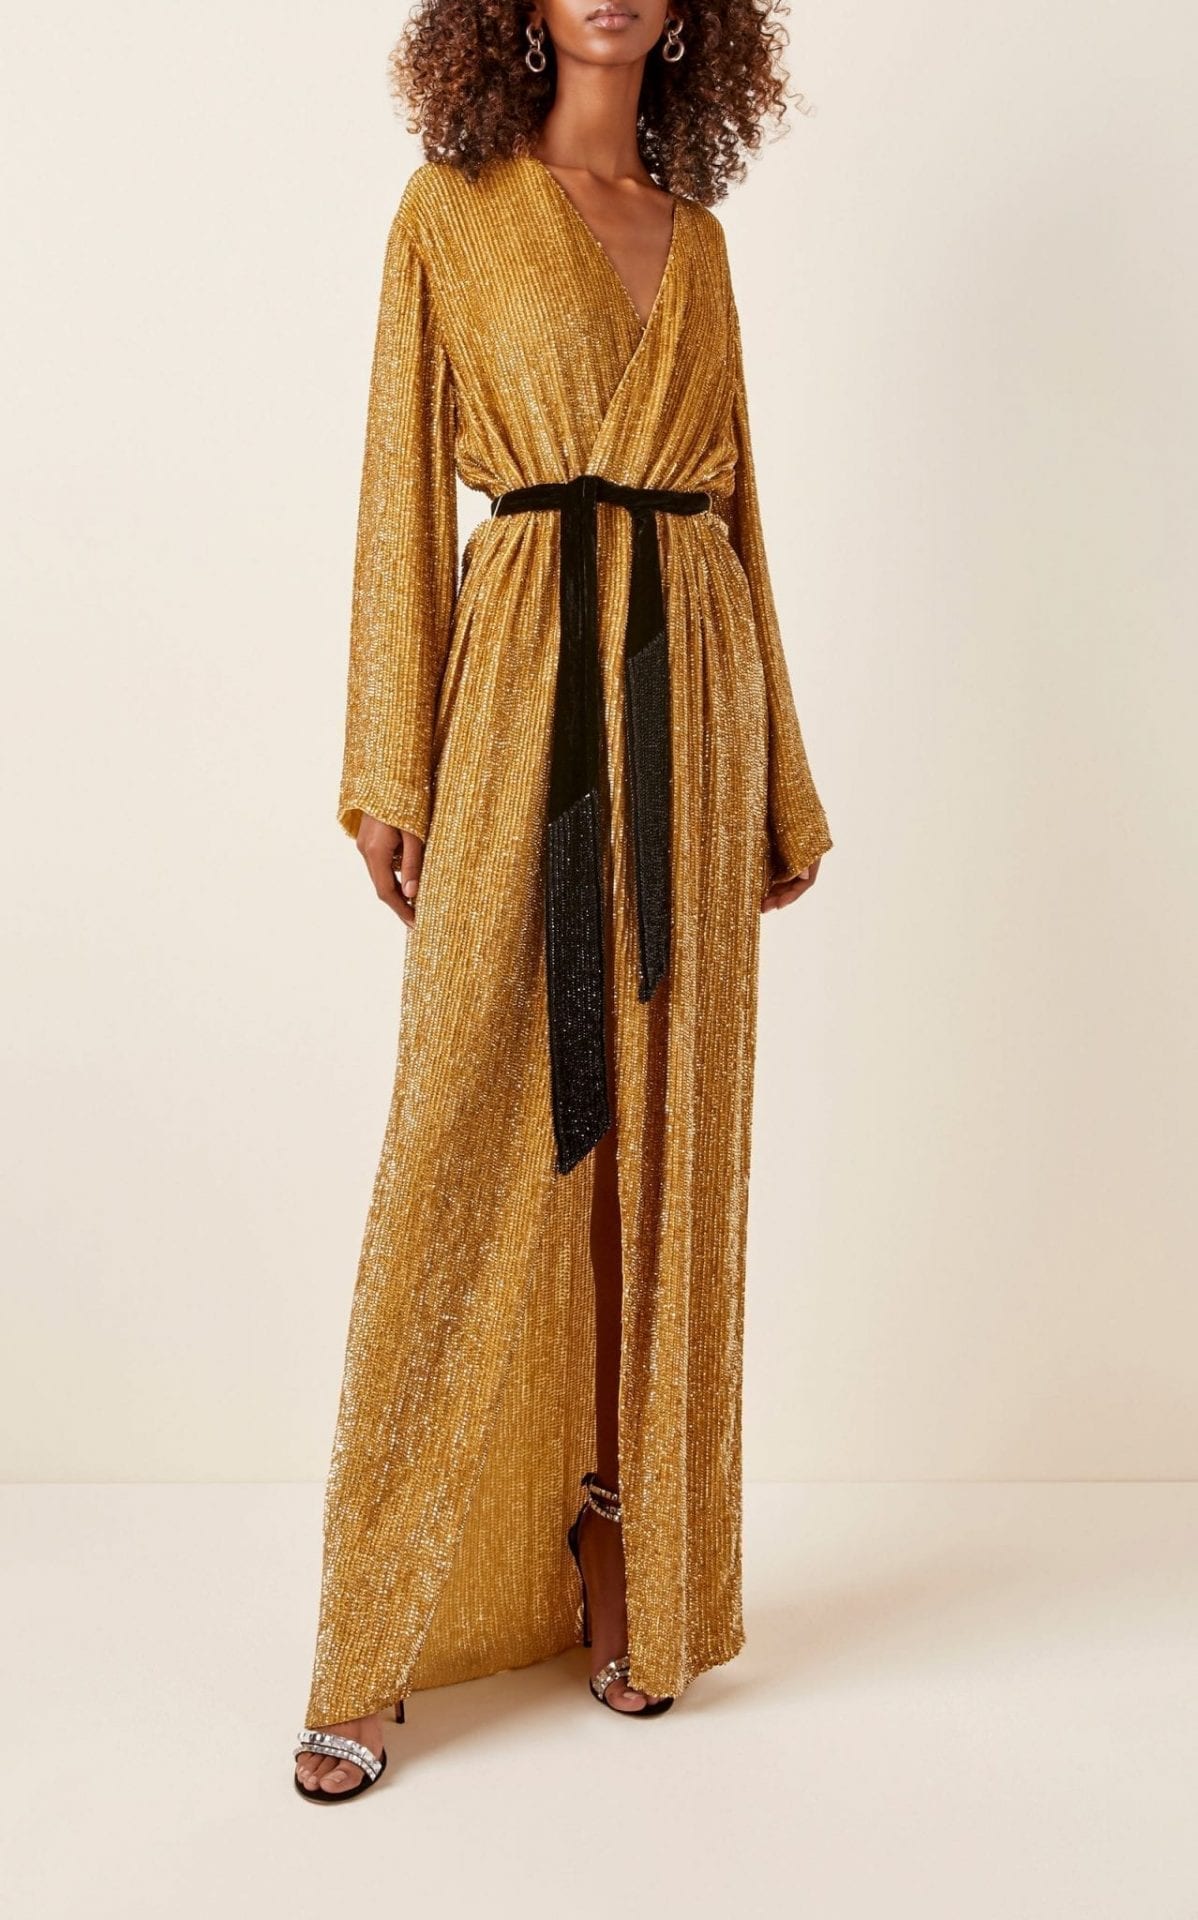 RETROFETE JANET GOLD SEQUIN DRESS